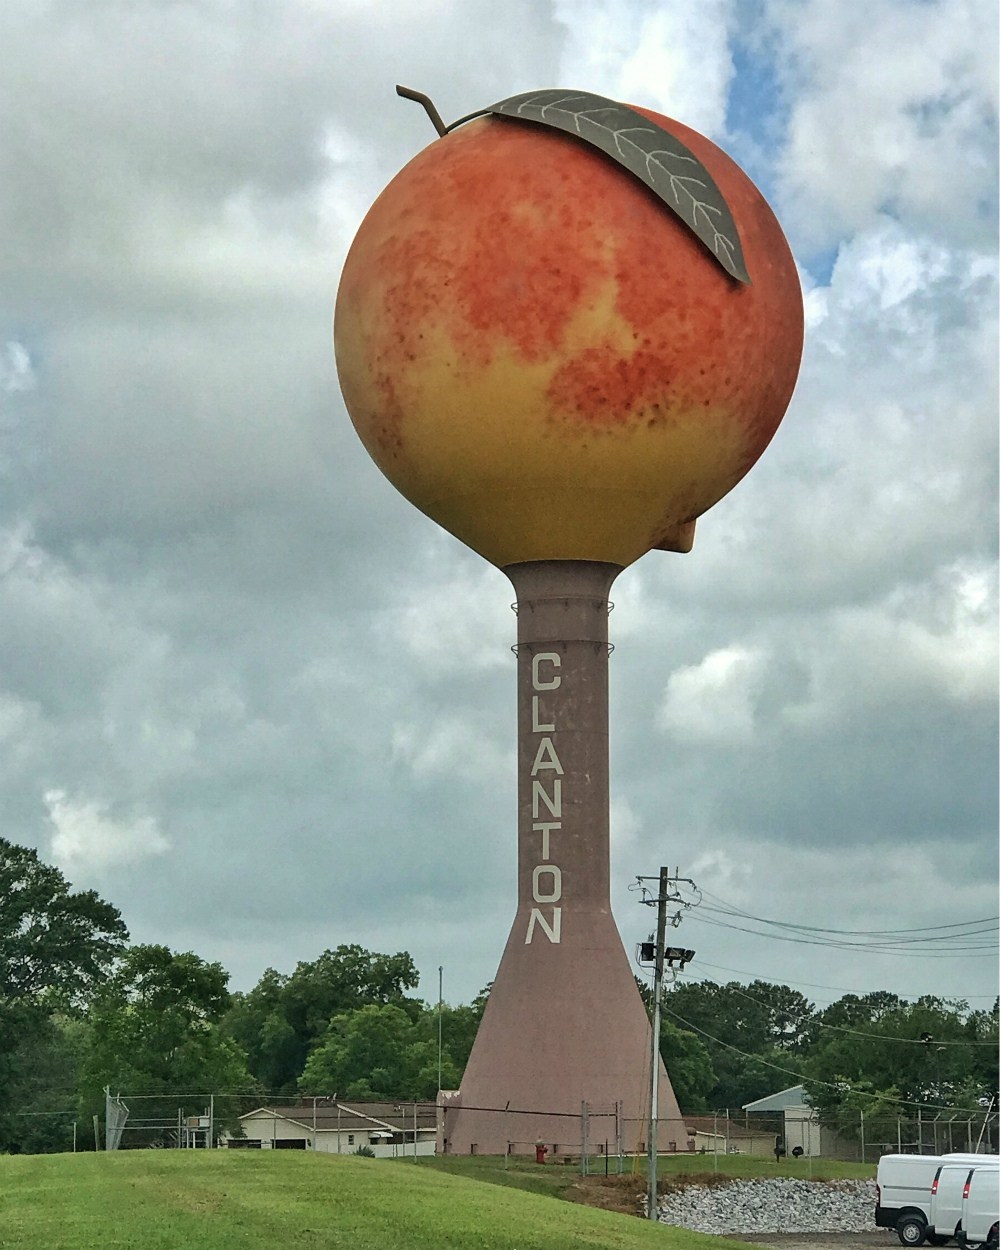 Peach tower in Clanton Alabama